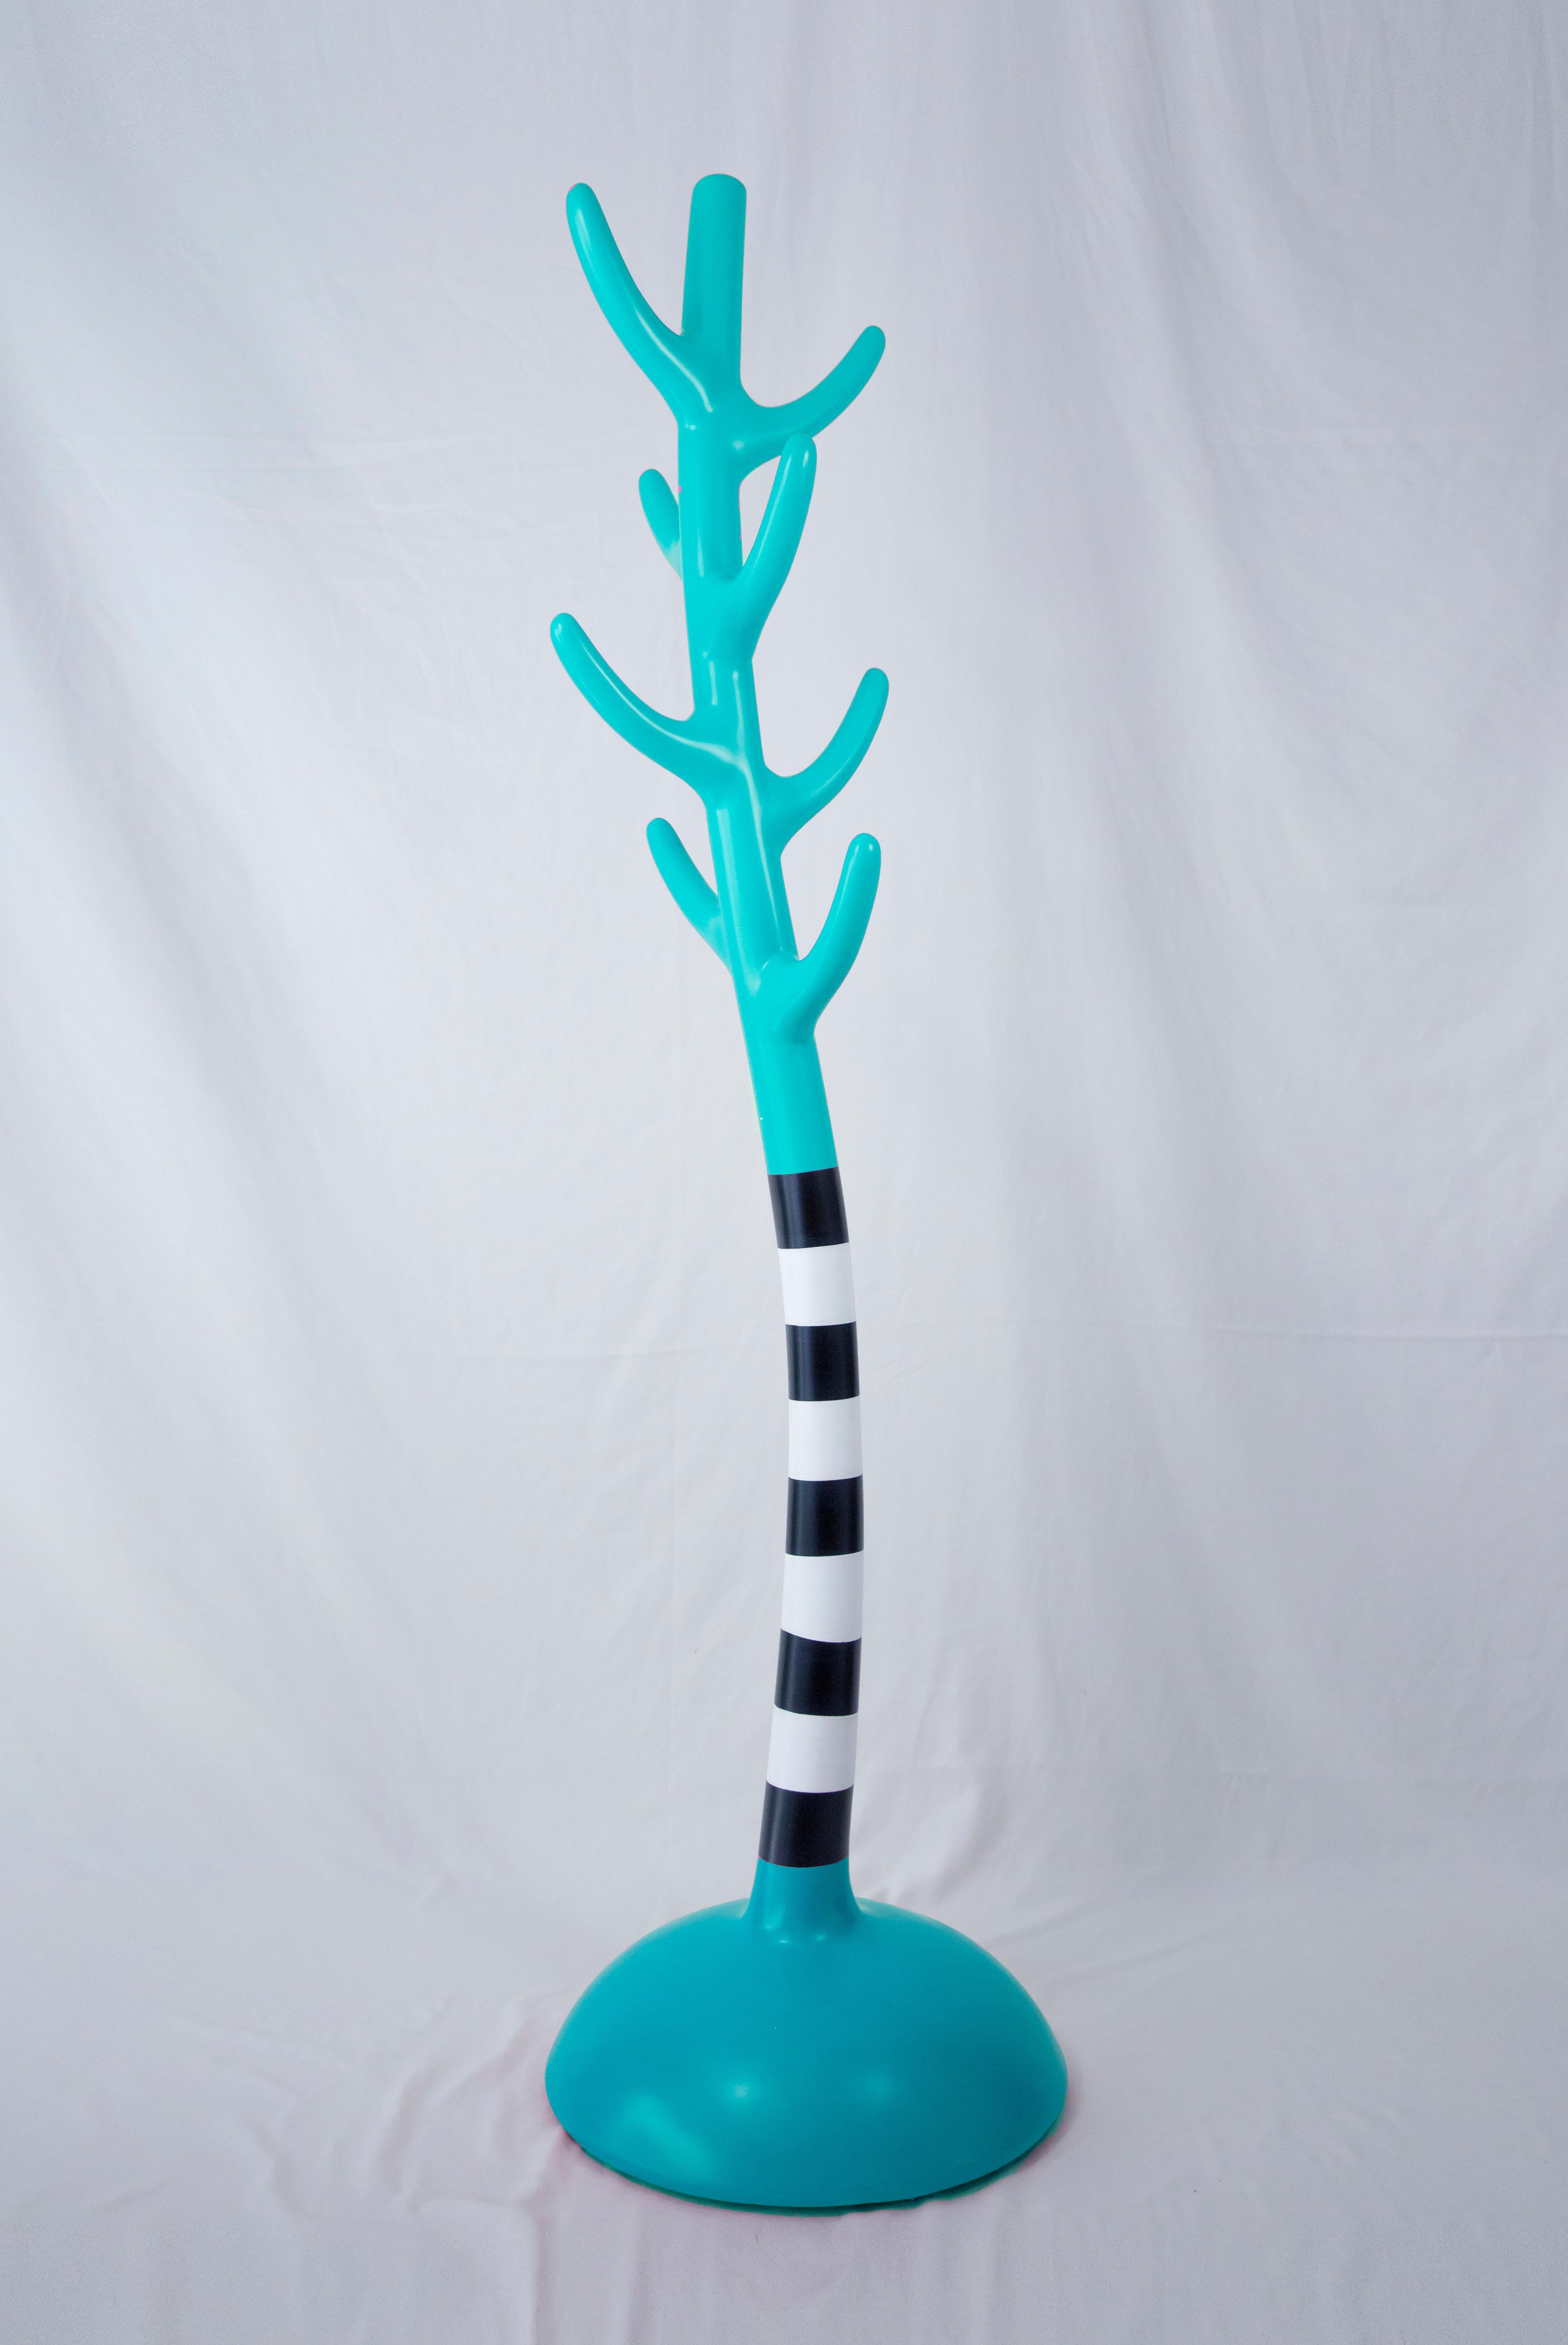 Cast Crooked Coat Rack: Turquoise Sculptural Artistic Hanger For Sale